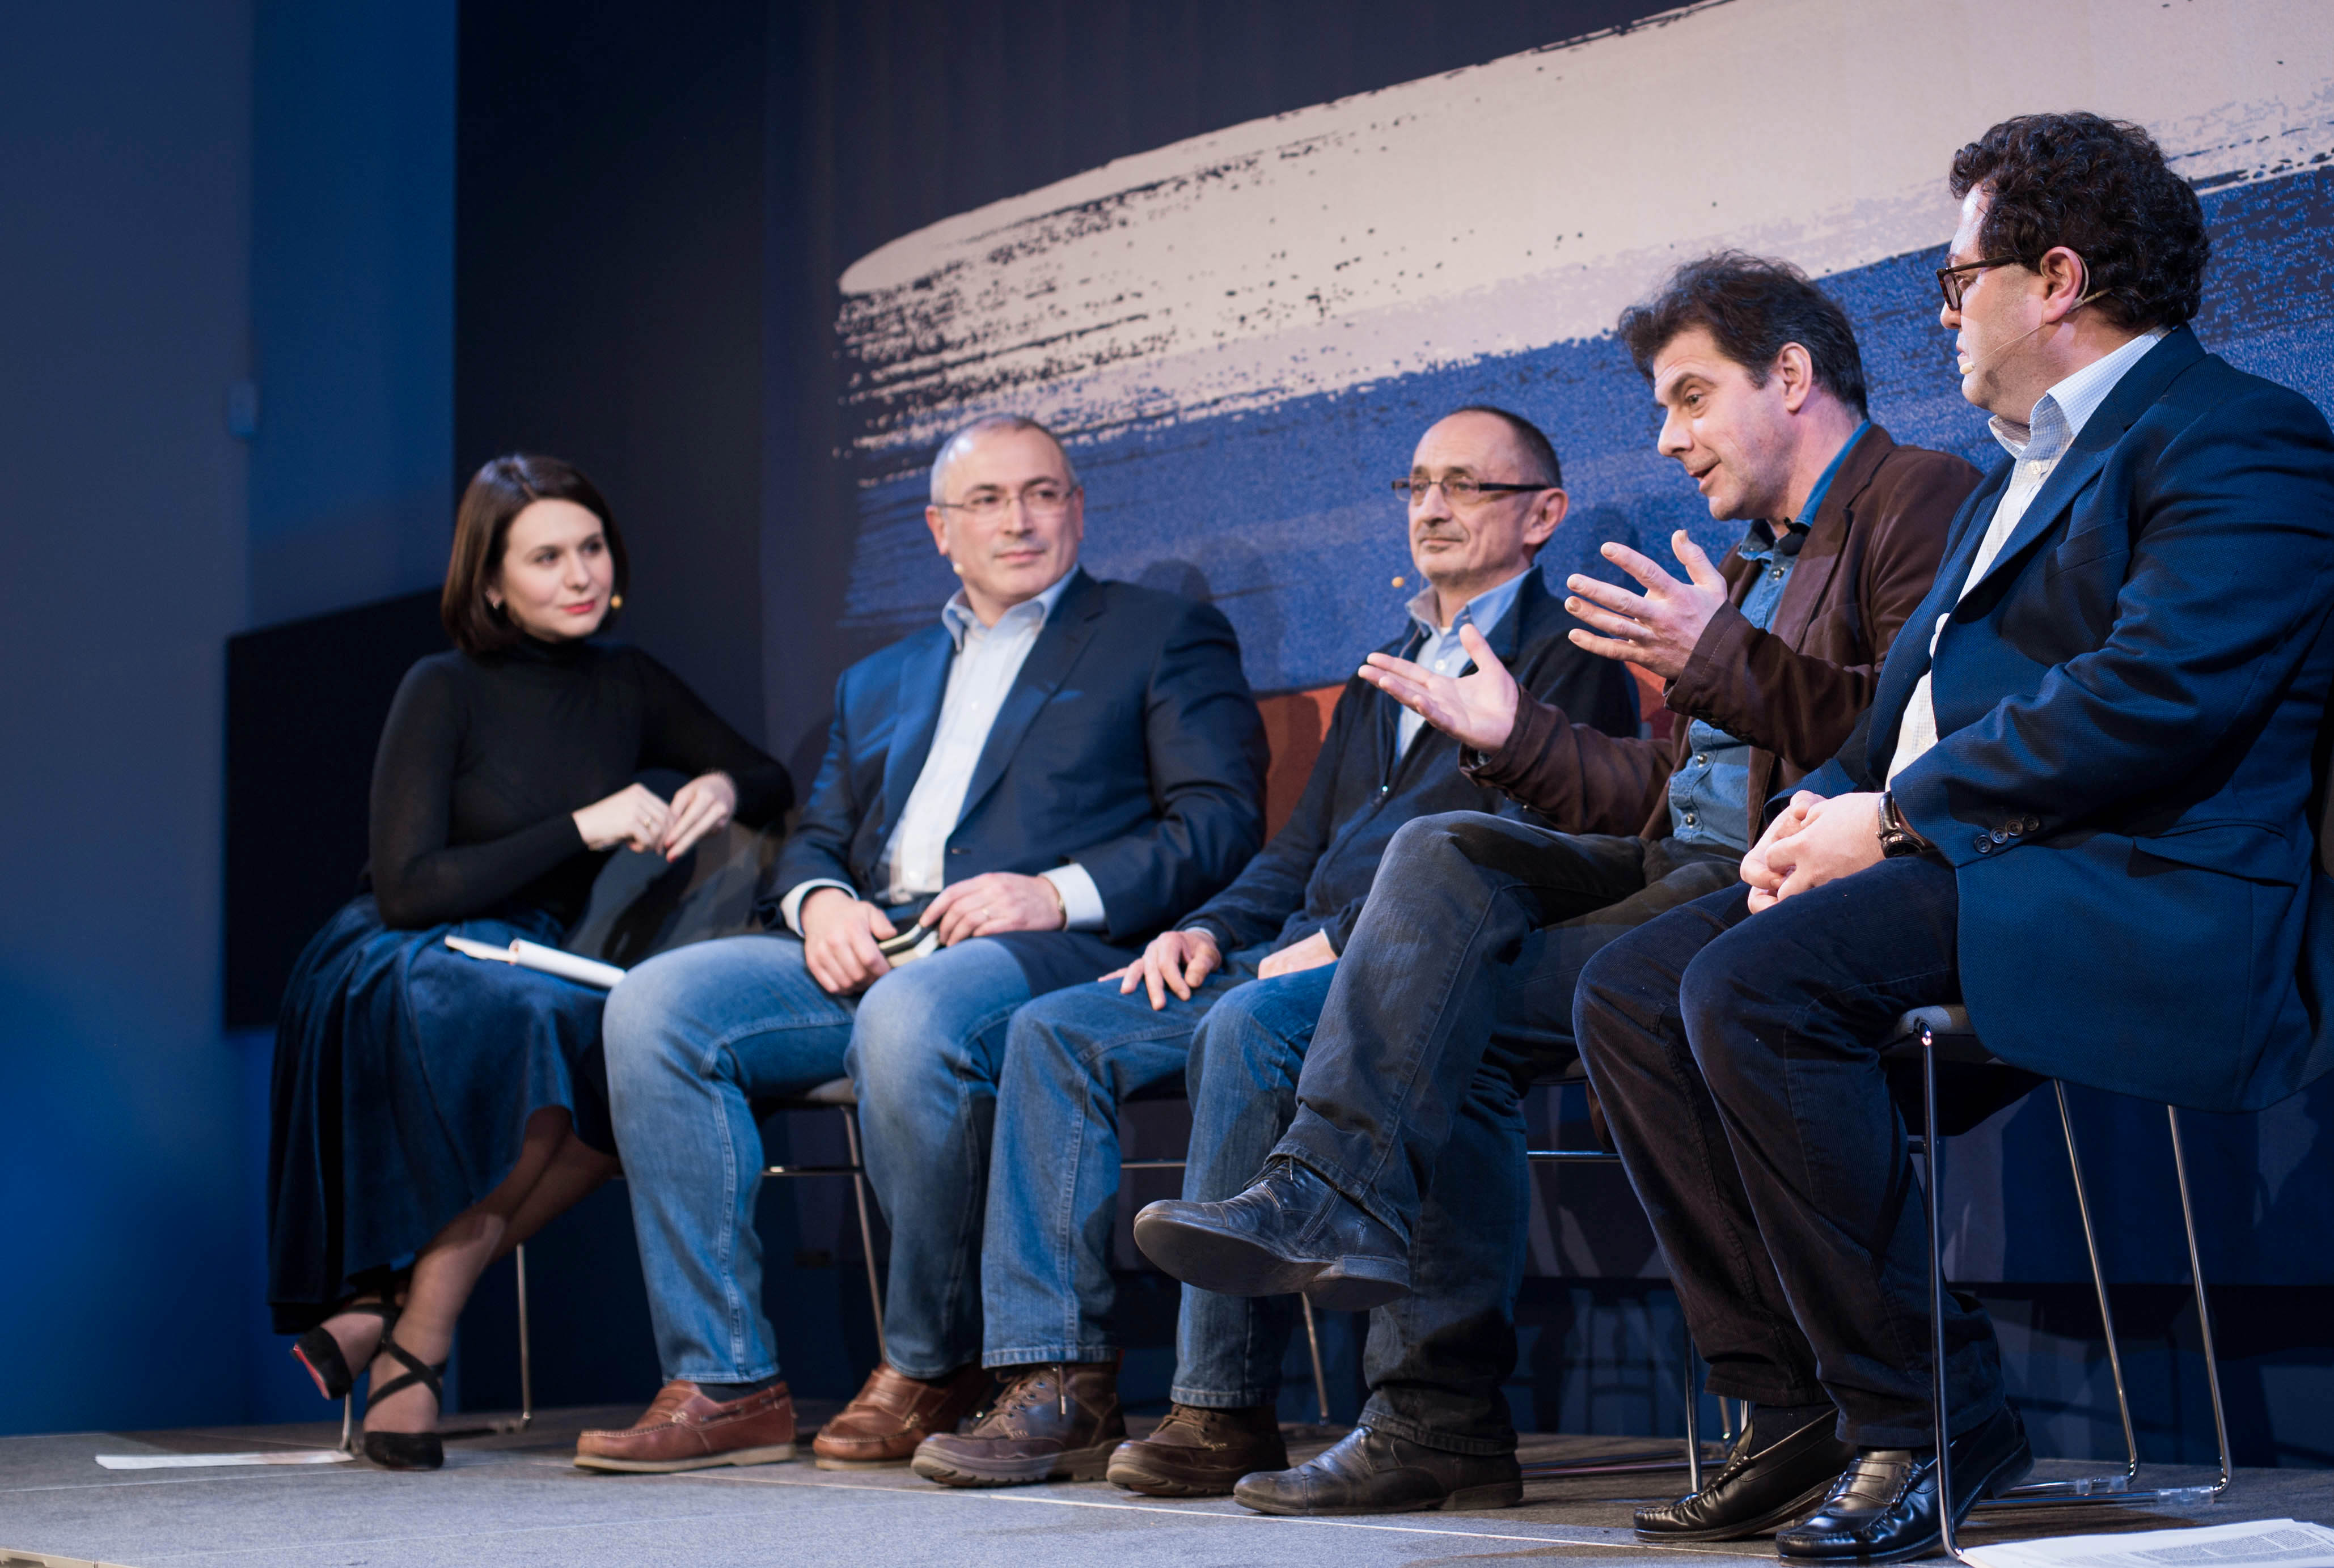 Elena Servettaz在伦敦主持的一场小组讨论，与会者包括Michail Chodorkowski、政治学家Alexander Morosow和Kirill Rogow以及《经济学人》记者Arkadij Ostrovskij。